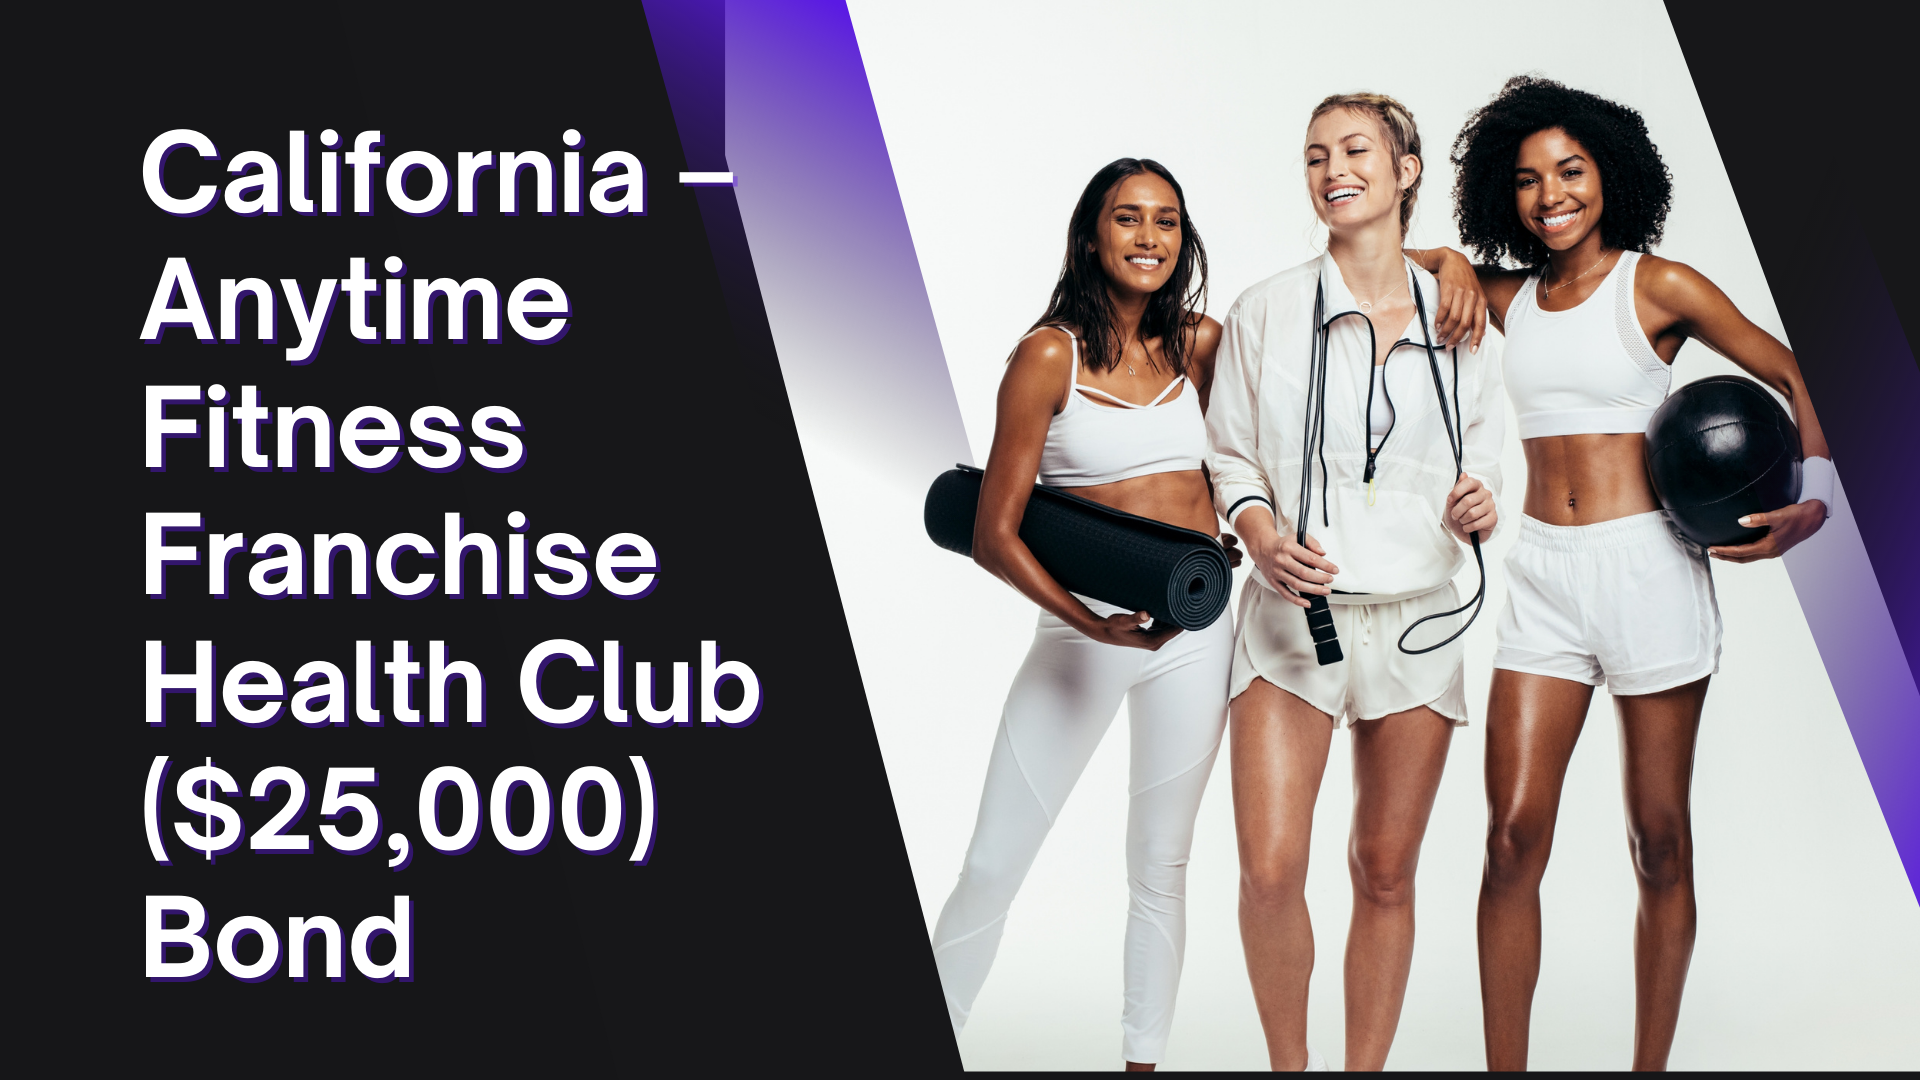 Surety Bond - California – Anytime Fitness Franchise Health Club ($25,000) Bond